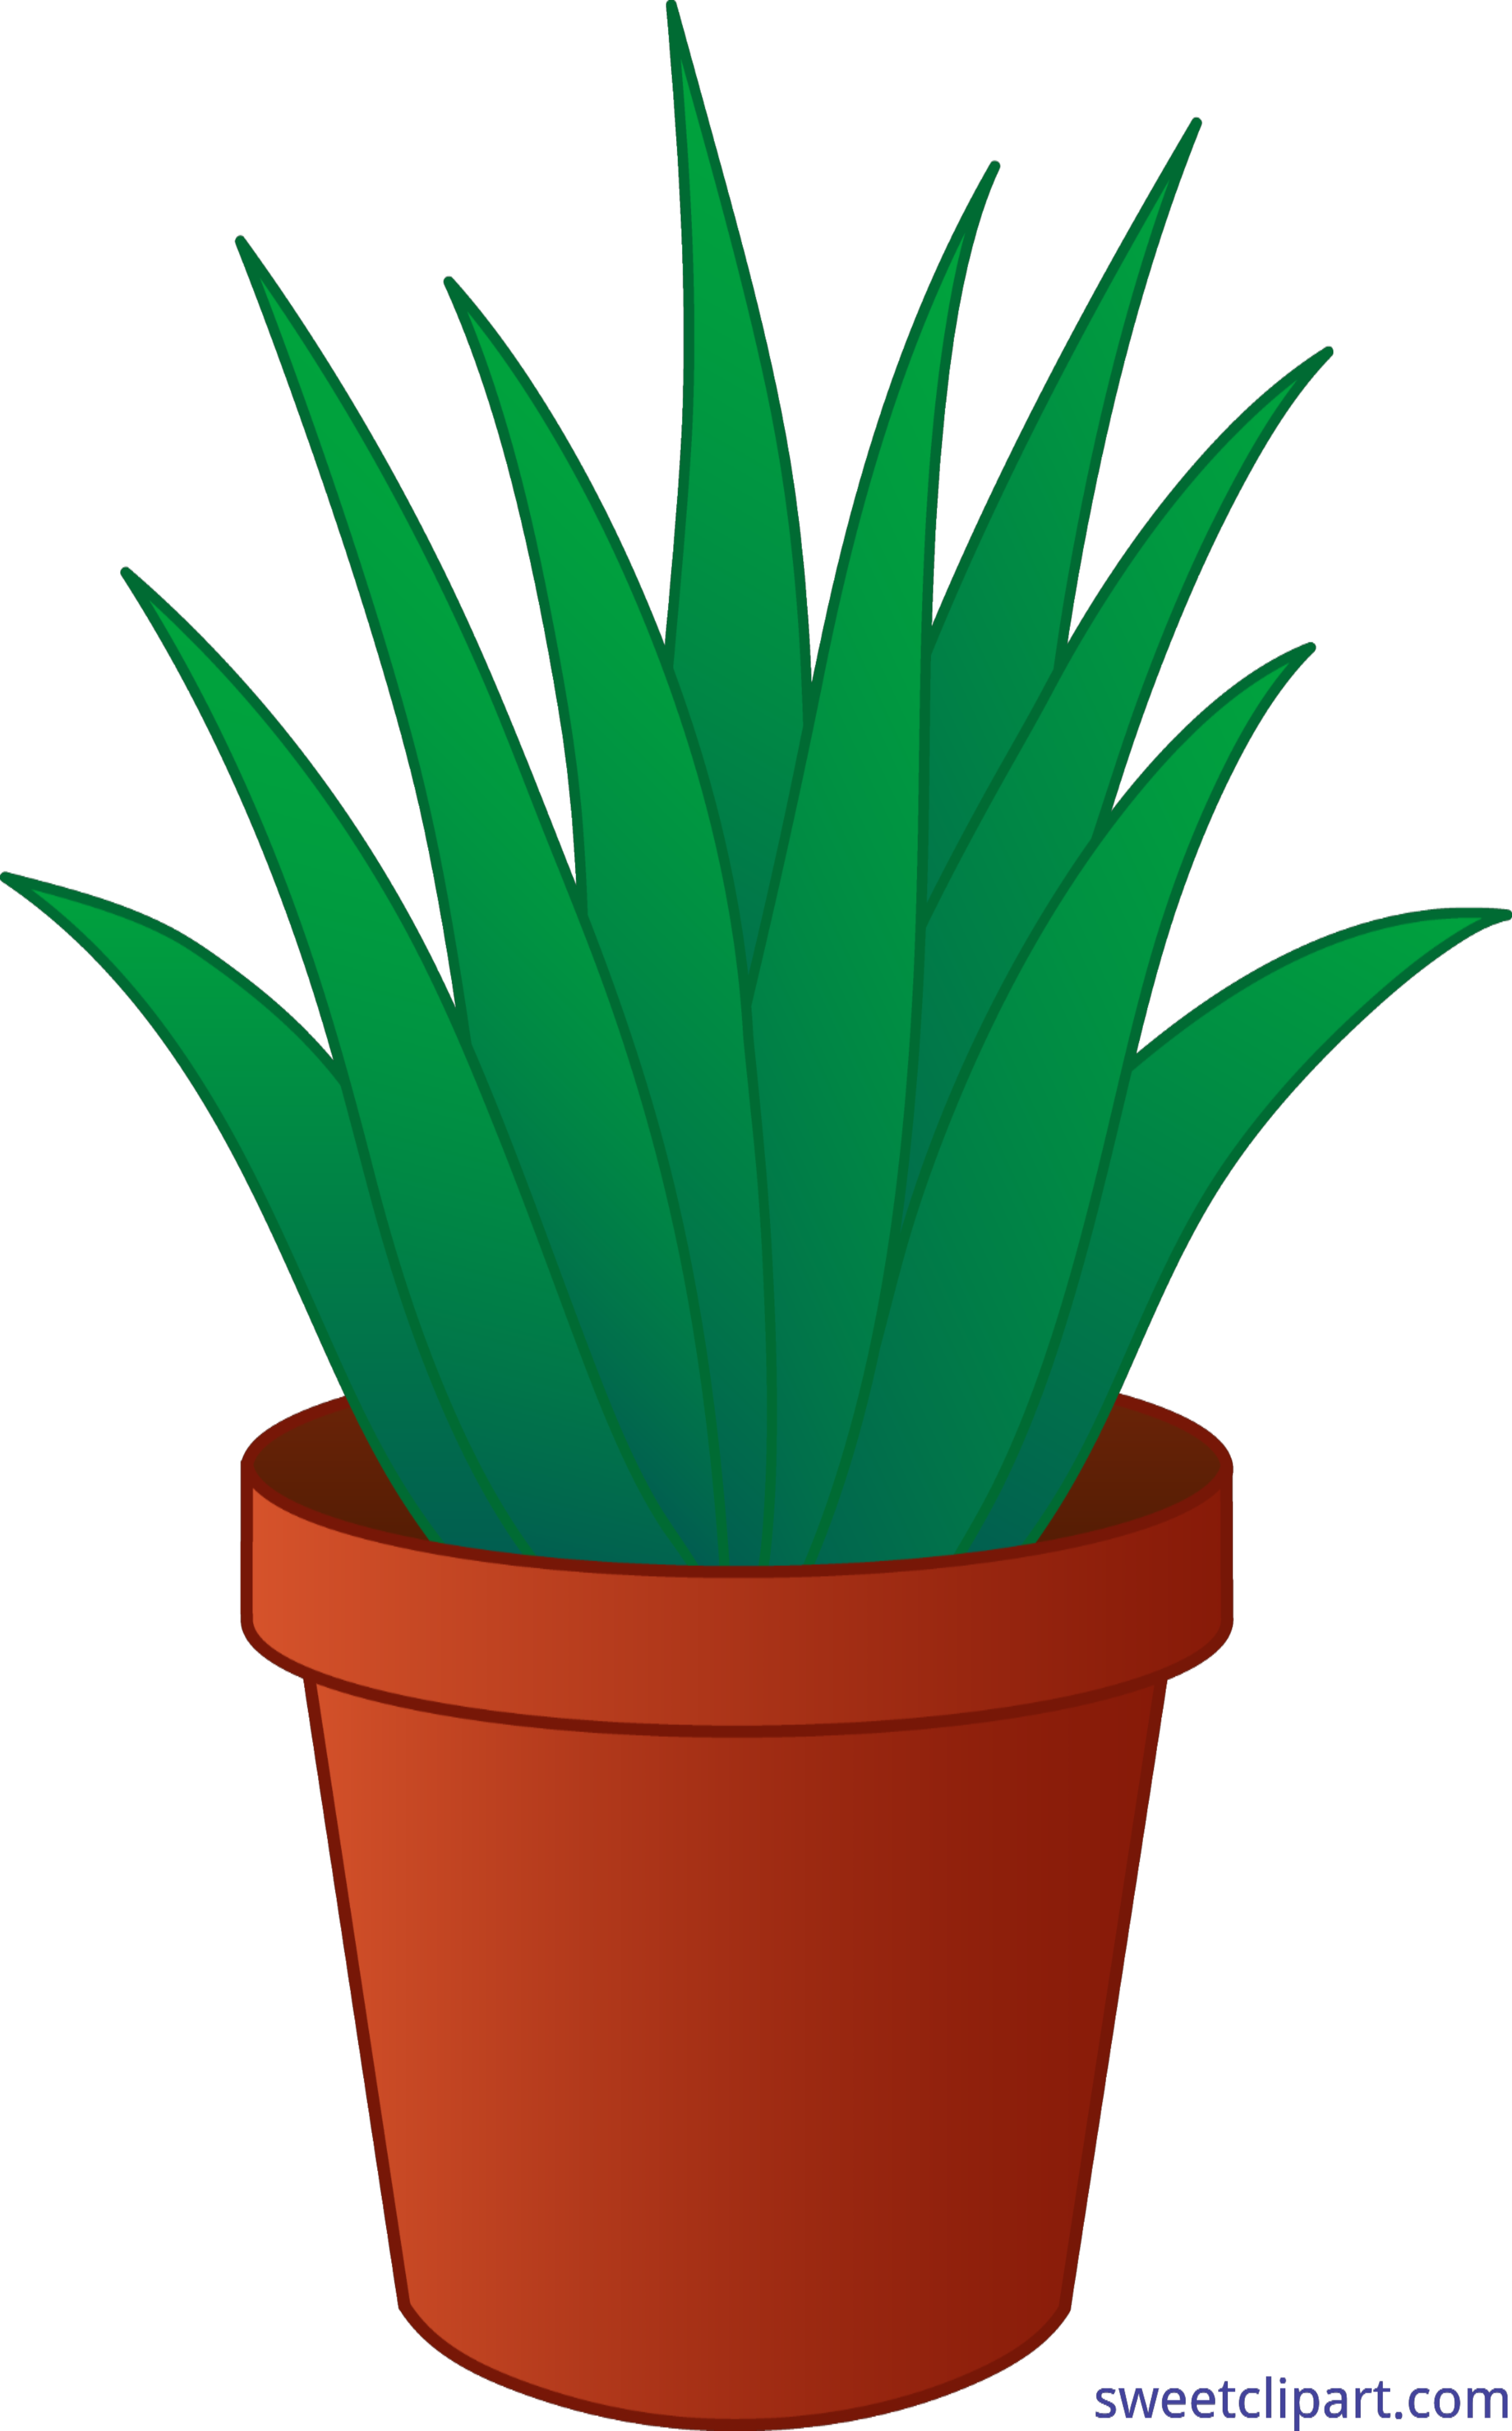 Aloe cartoon character vector